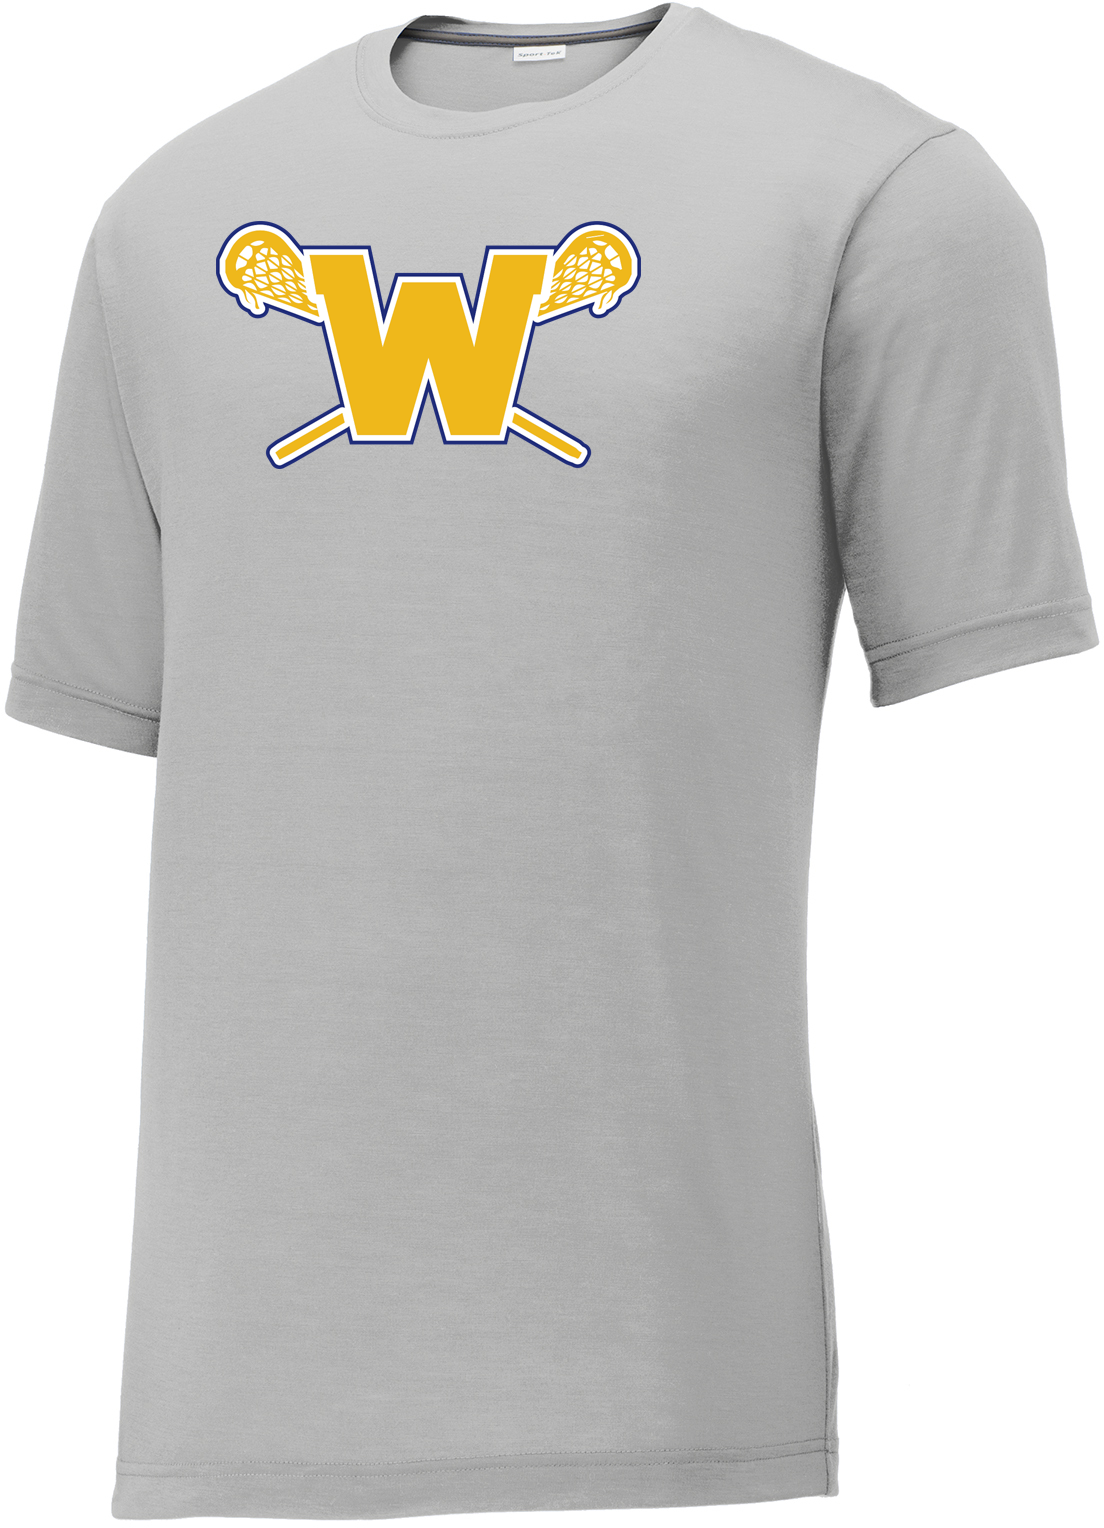 Webster Lacrosse Men's Silver CottonTouch Performance T-Shirt